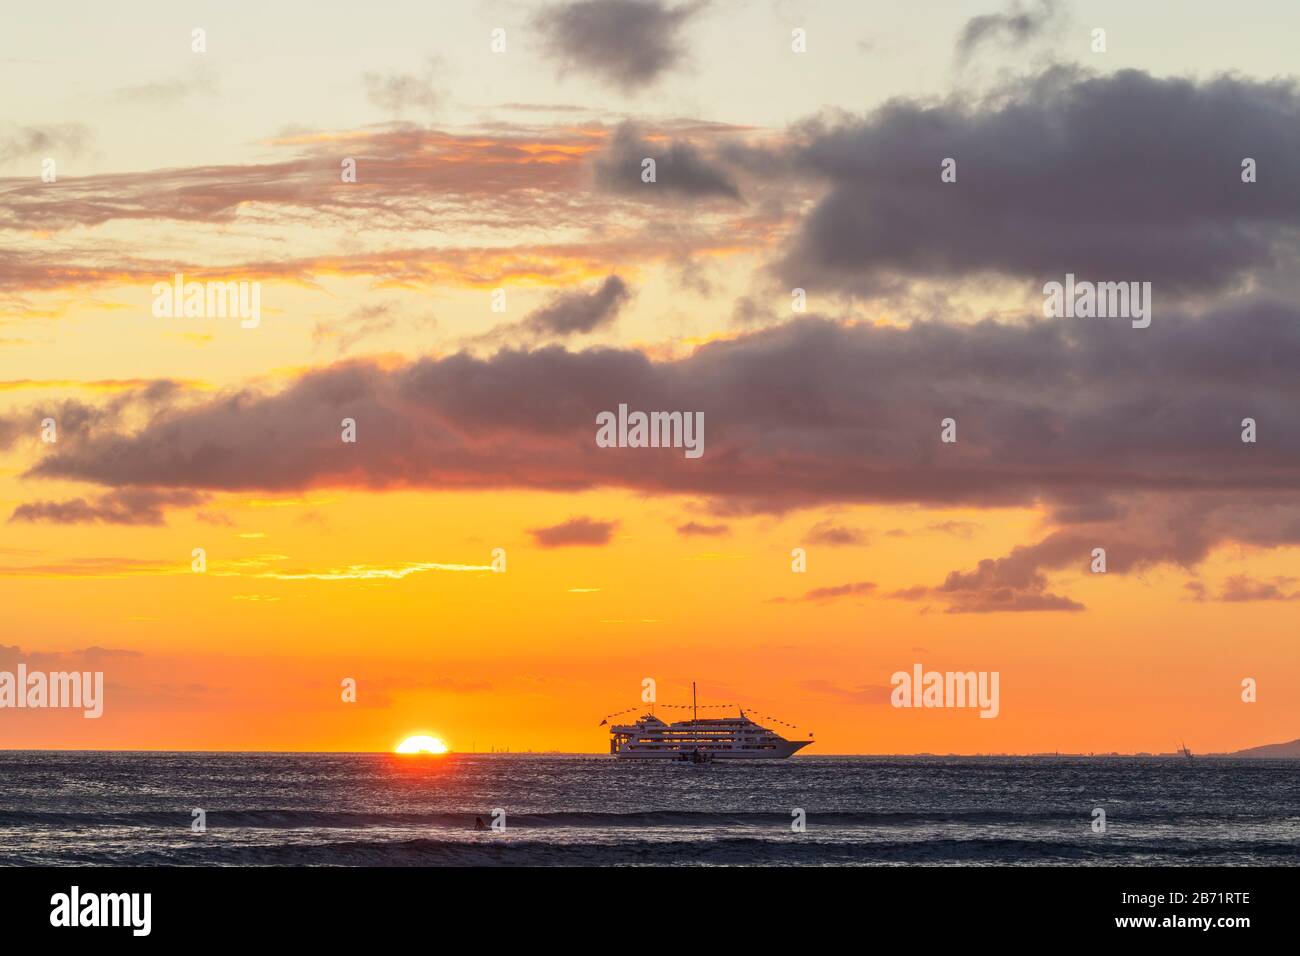 United States of America, Hawaii, Oahu island, cruise ship at sunset Stock Photo